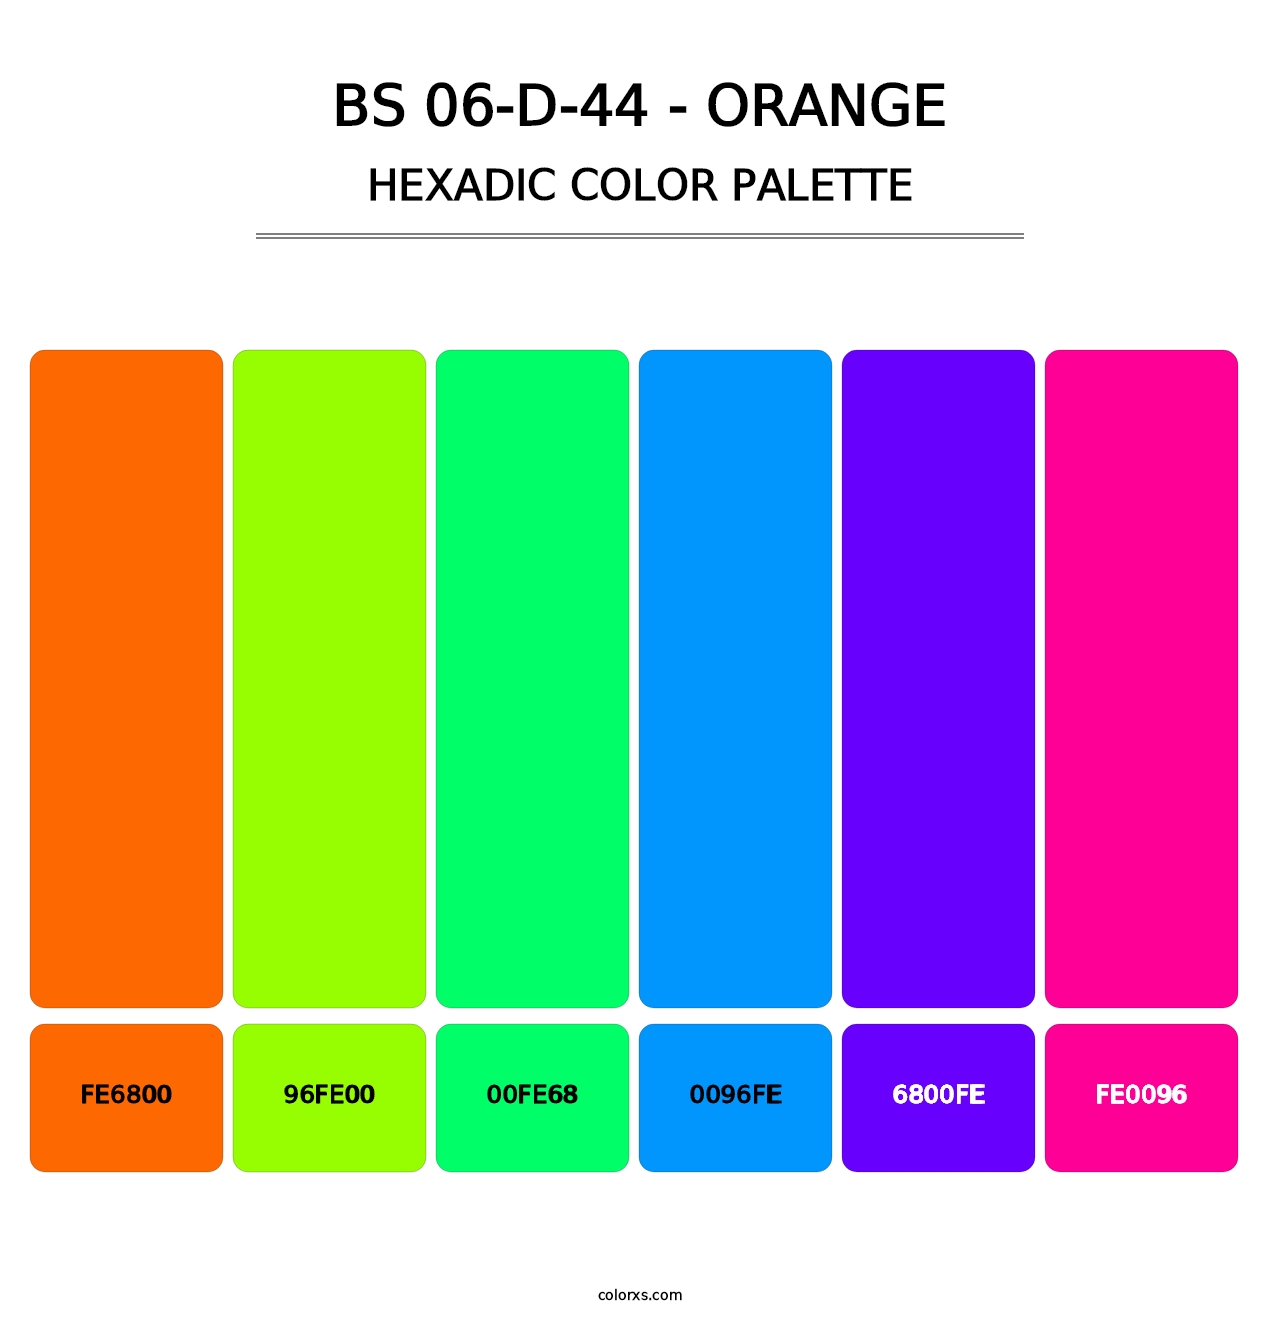 BS 06-D-44 - Orange - Hexadic Color Palette